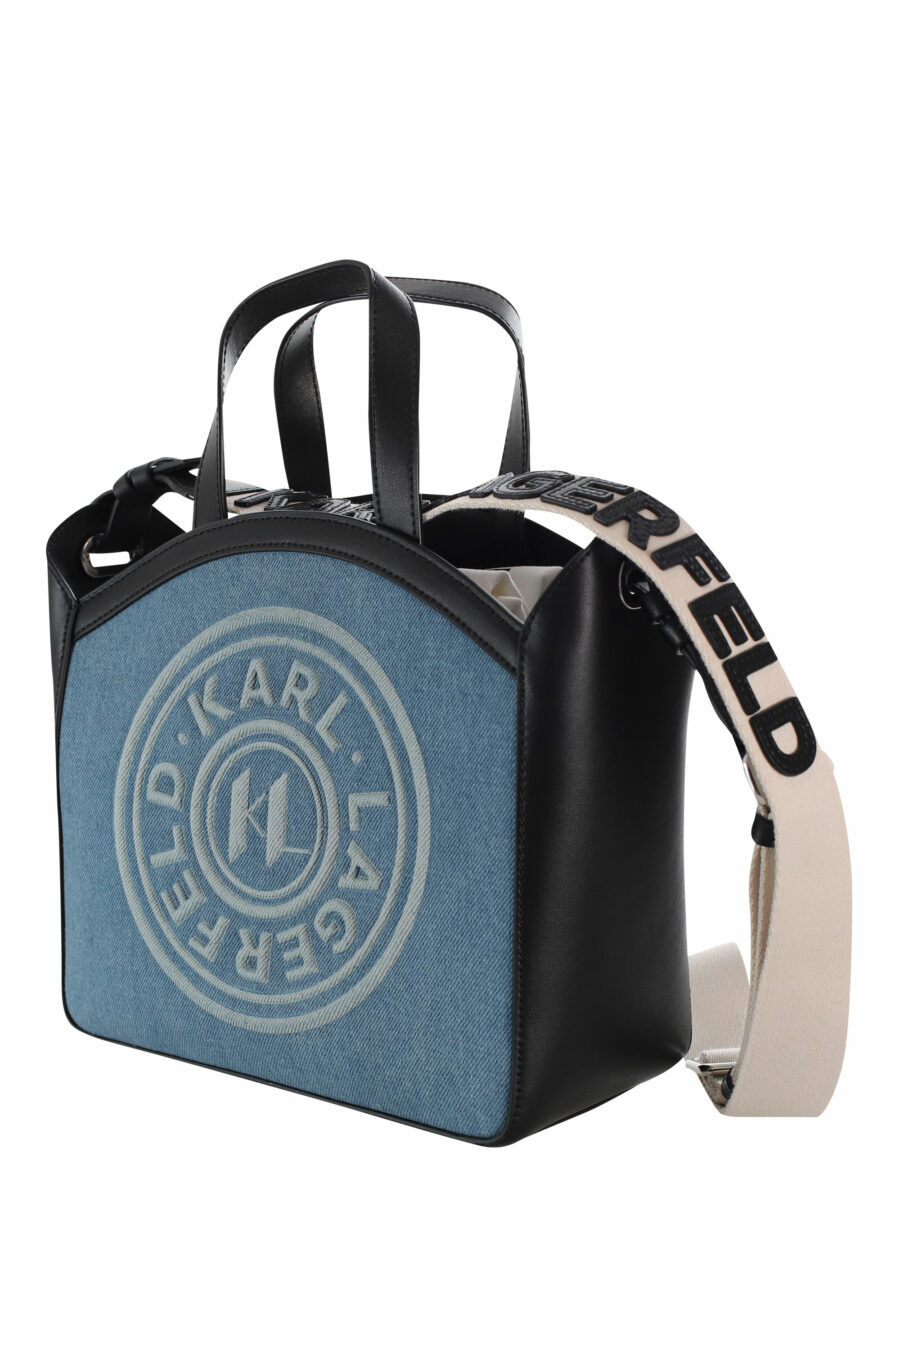 Tote bag blue with monochrome "k/circle" logo - 8720744234722 2